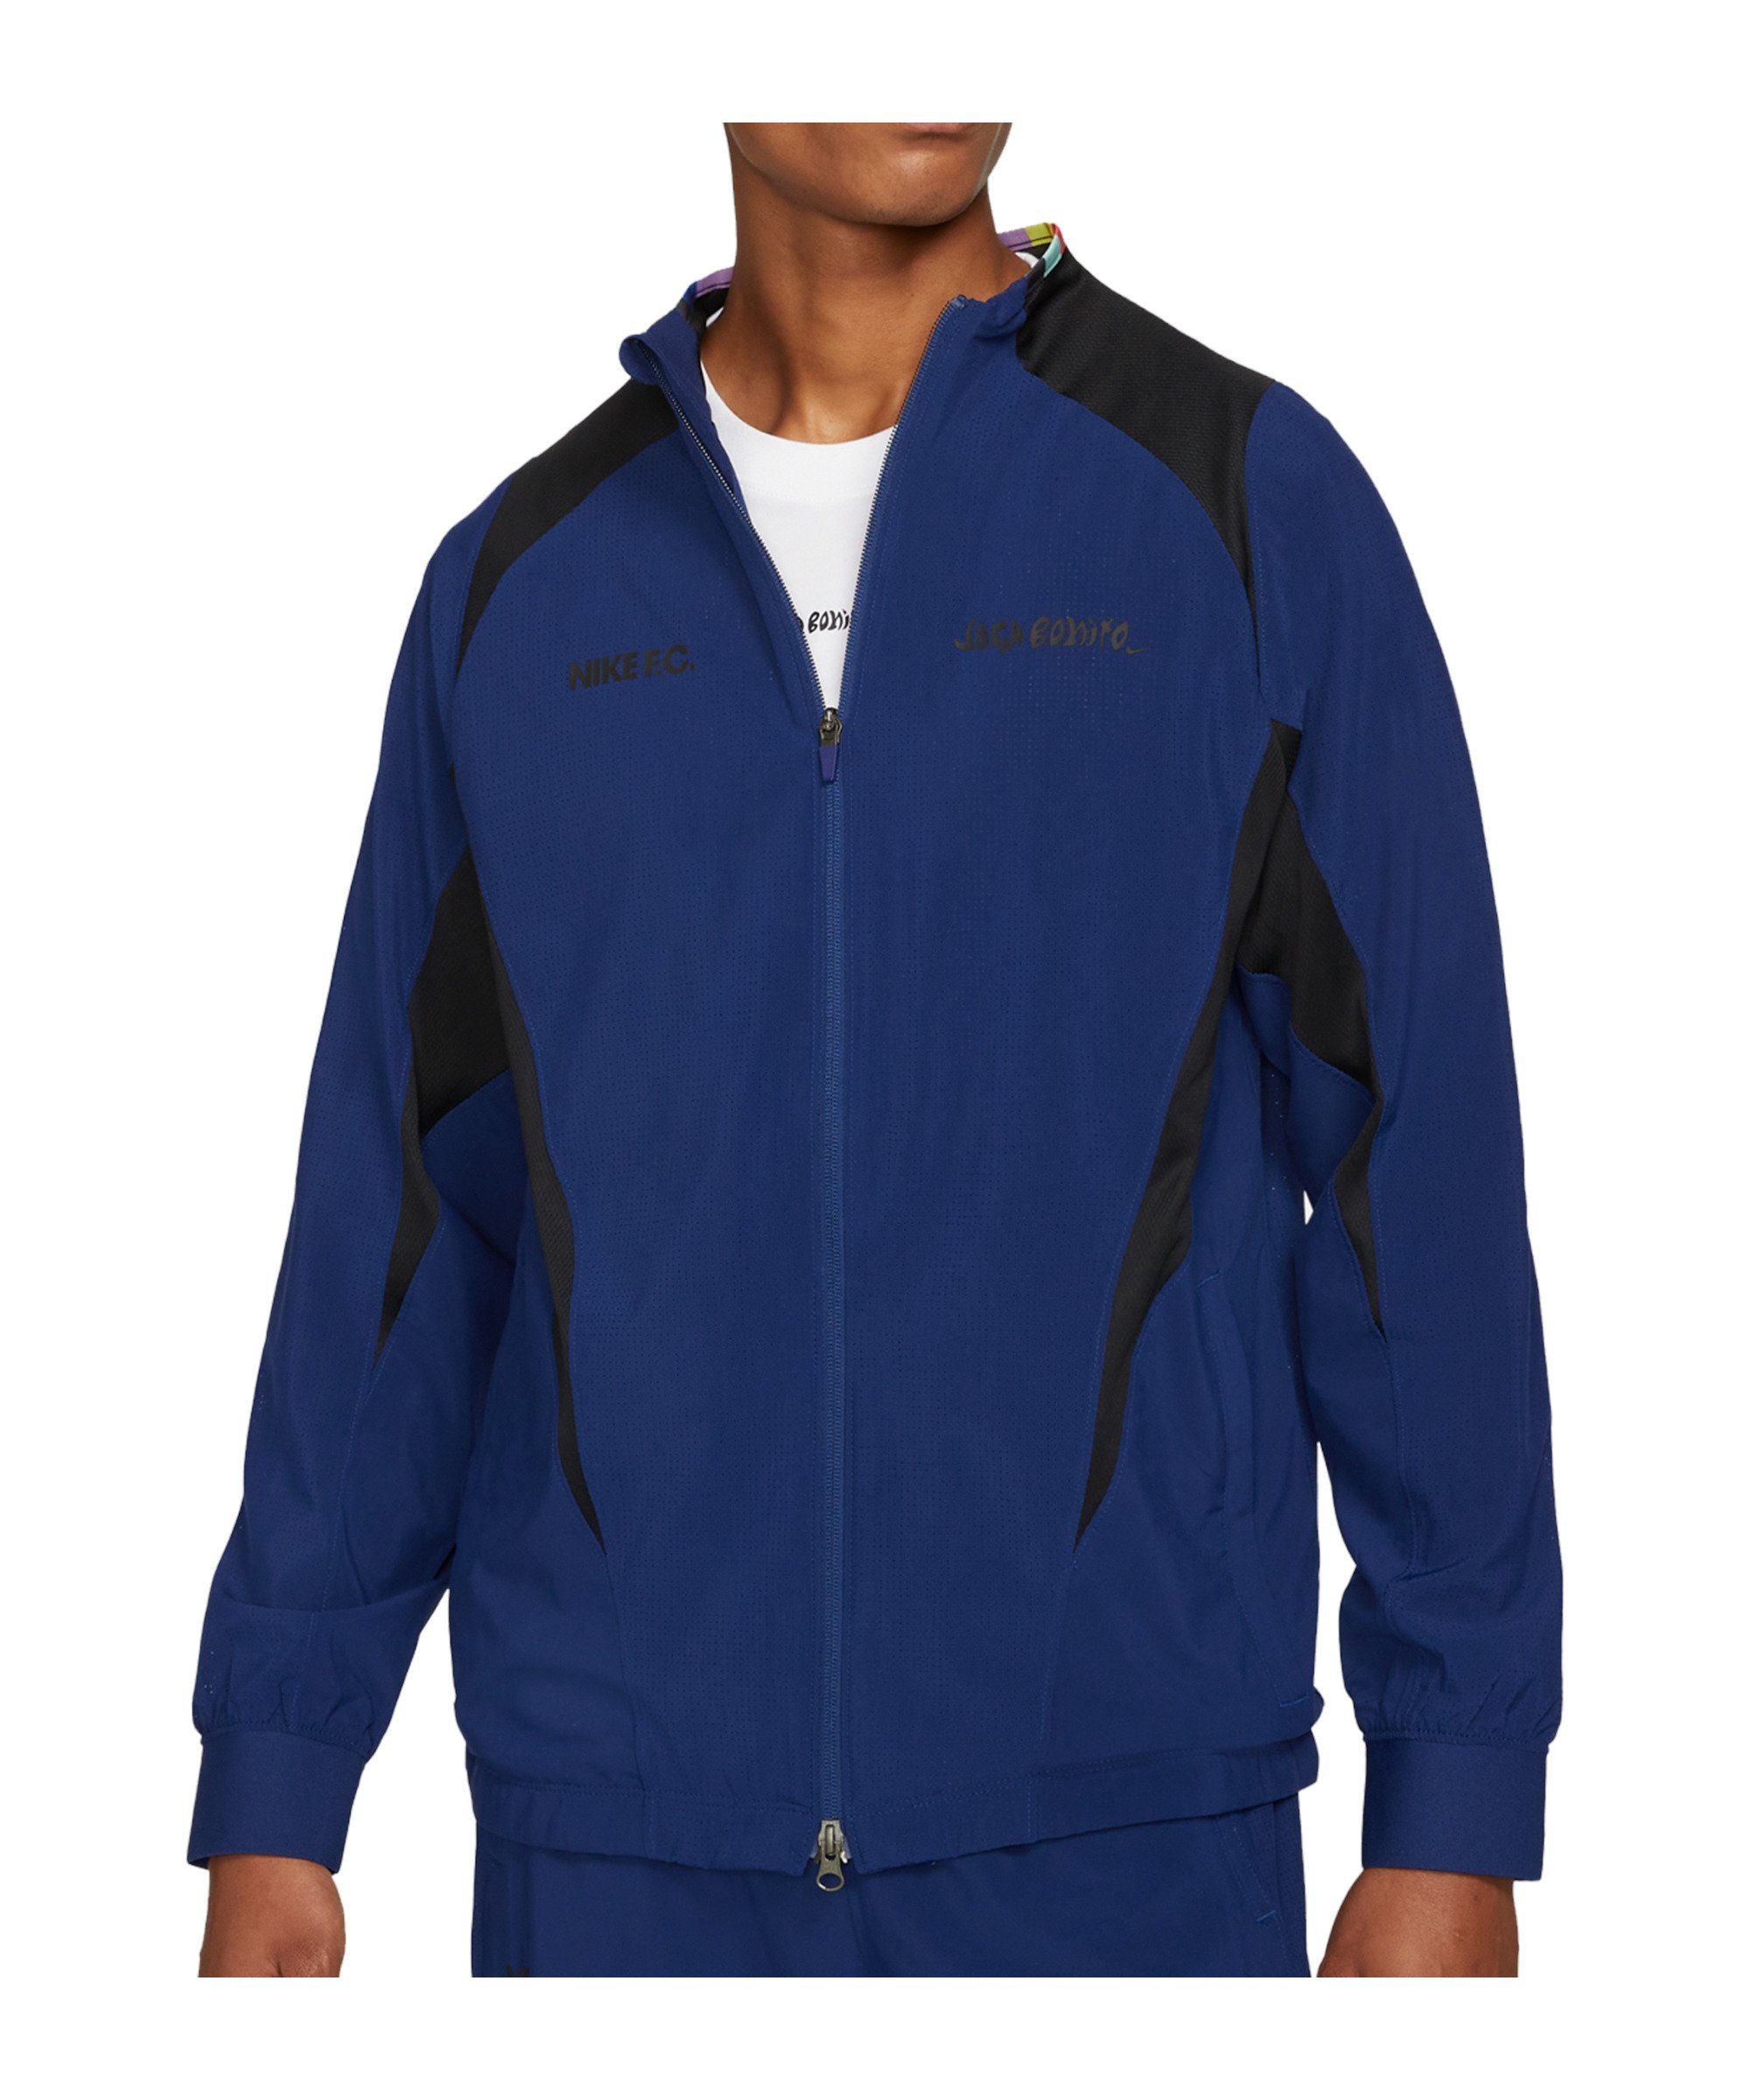 Nike Sportswear Sweatjacke F.C. Joga Bonito Woven Jacke blauschwarz